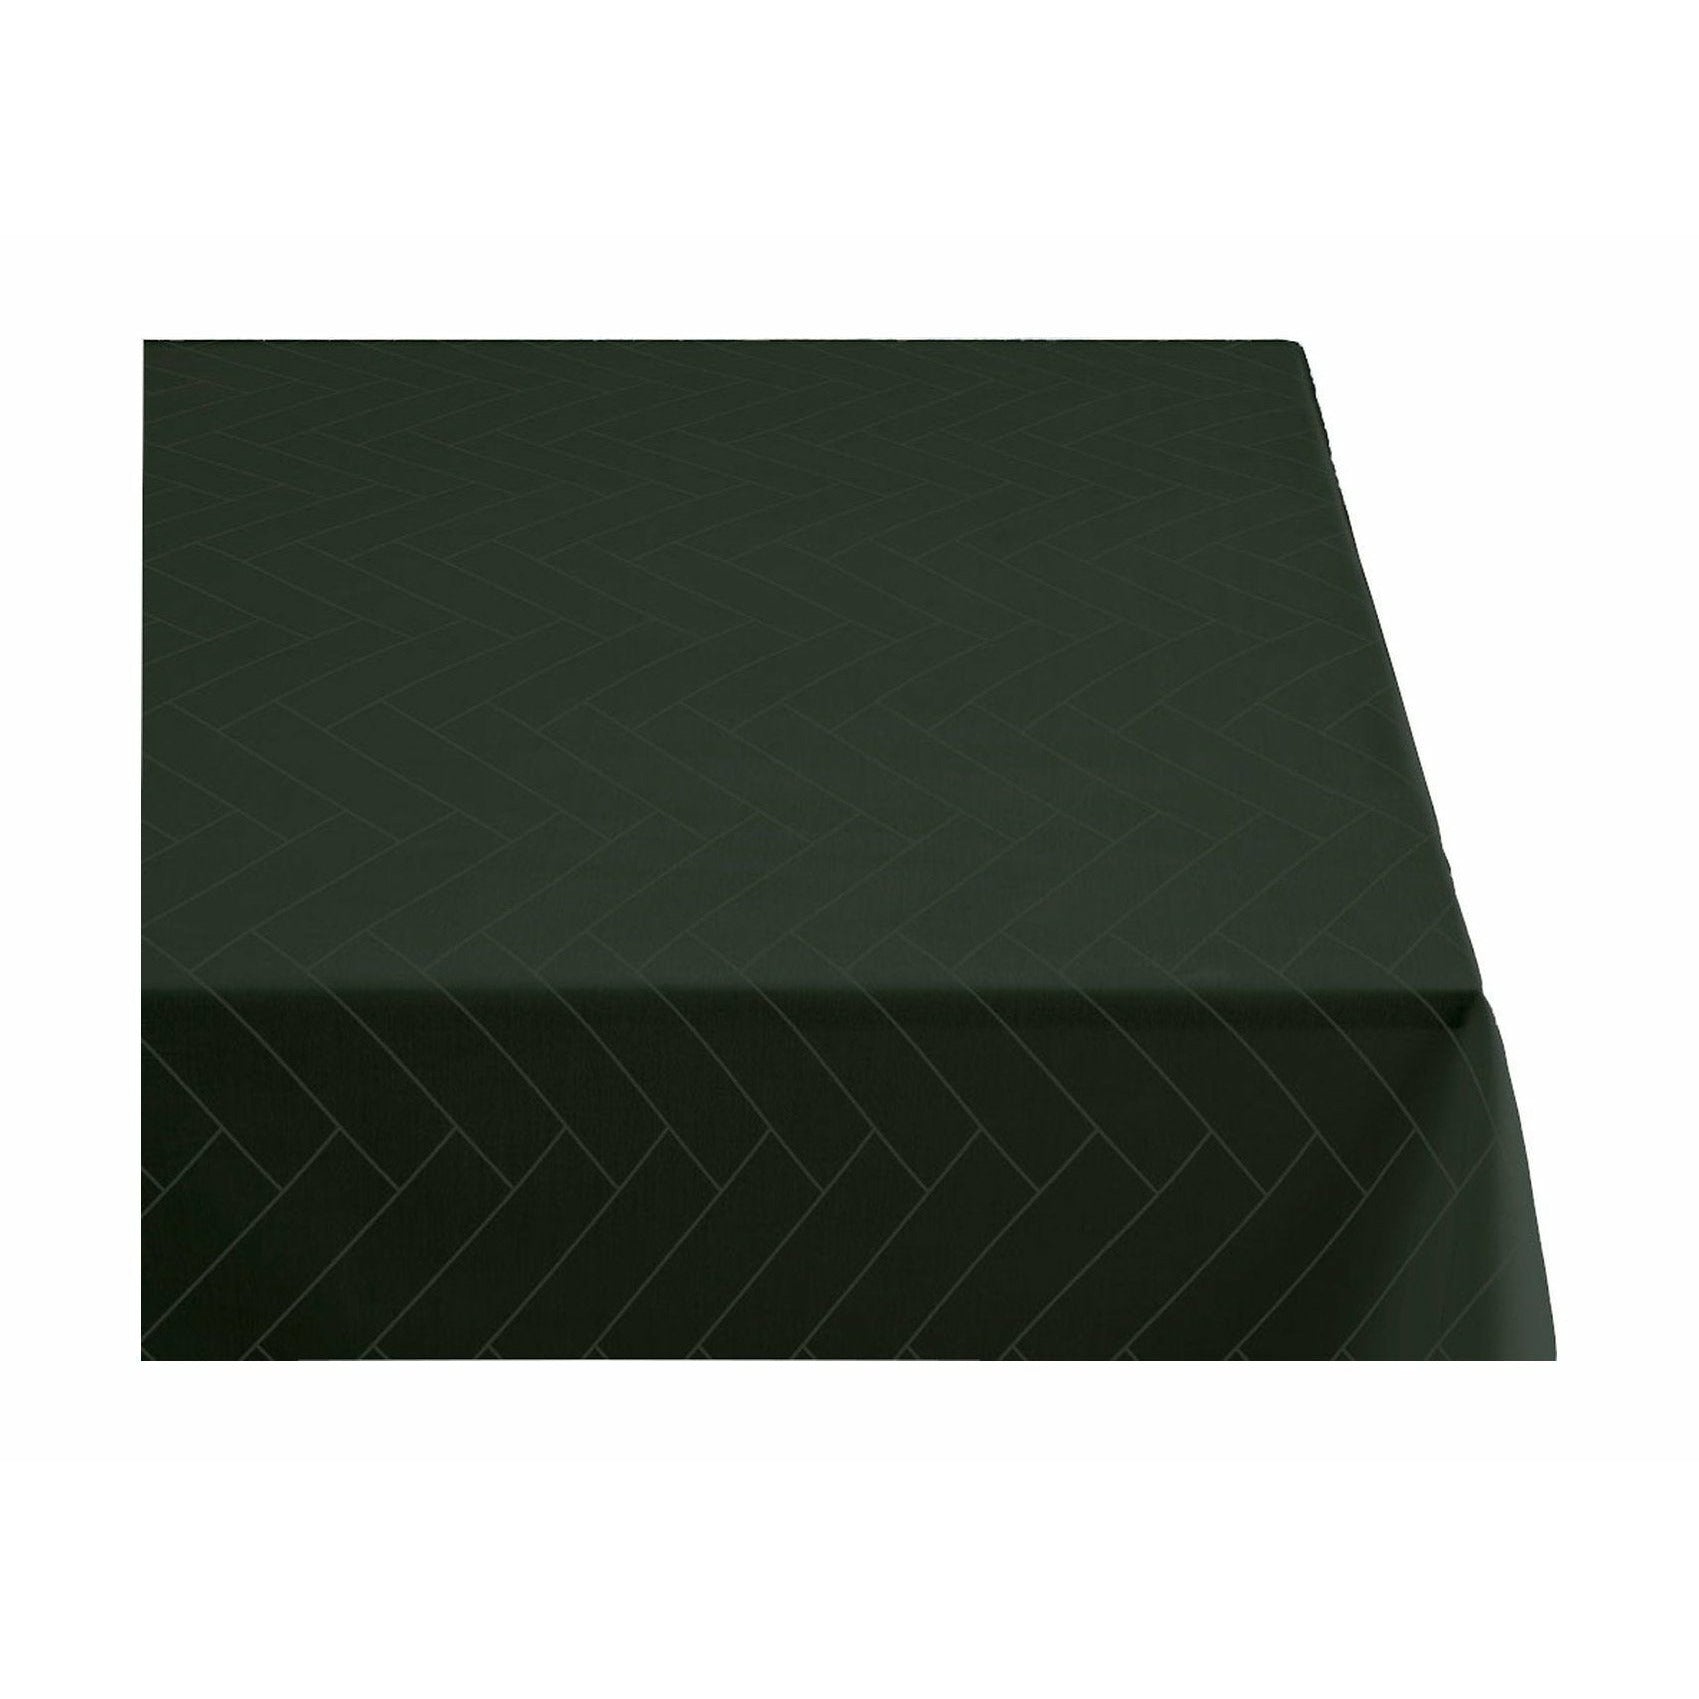 Södahl Dagg 140x220 brickor damask bordduk, skoggrön